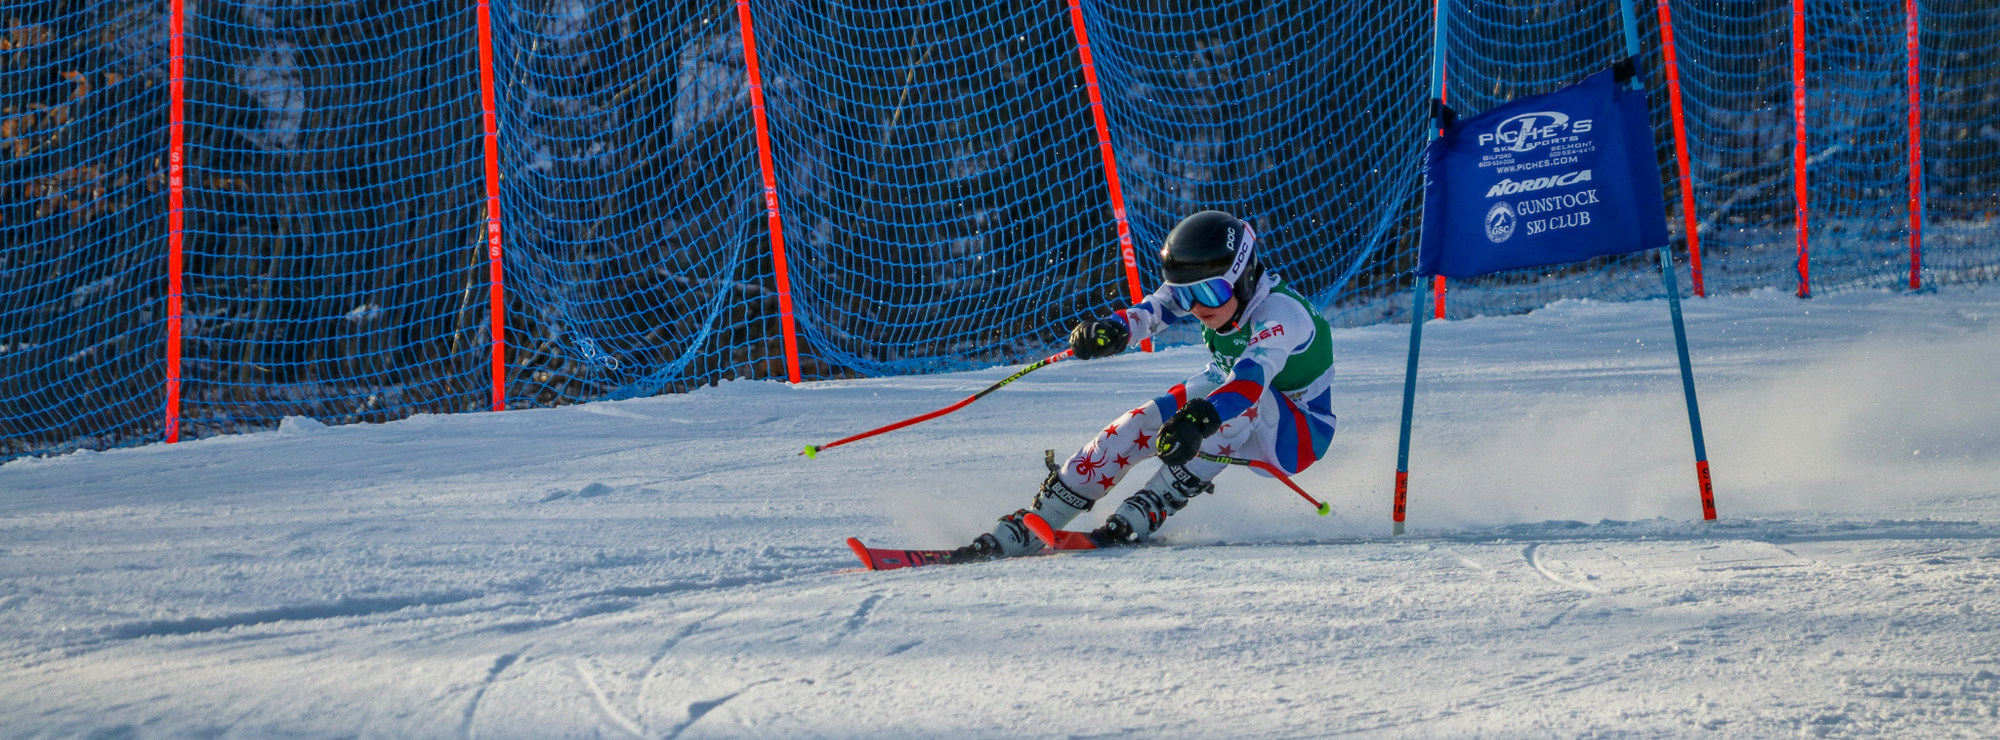 Skier races through a slalom course